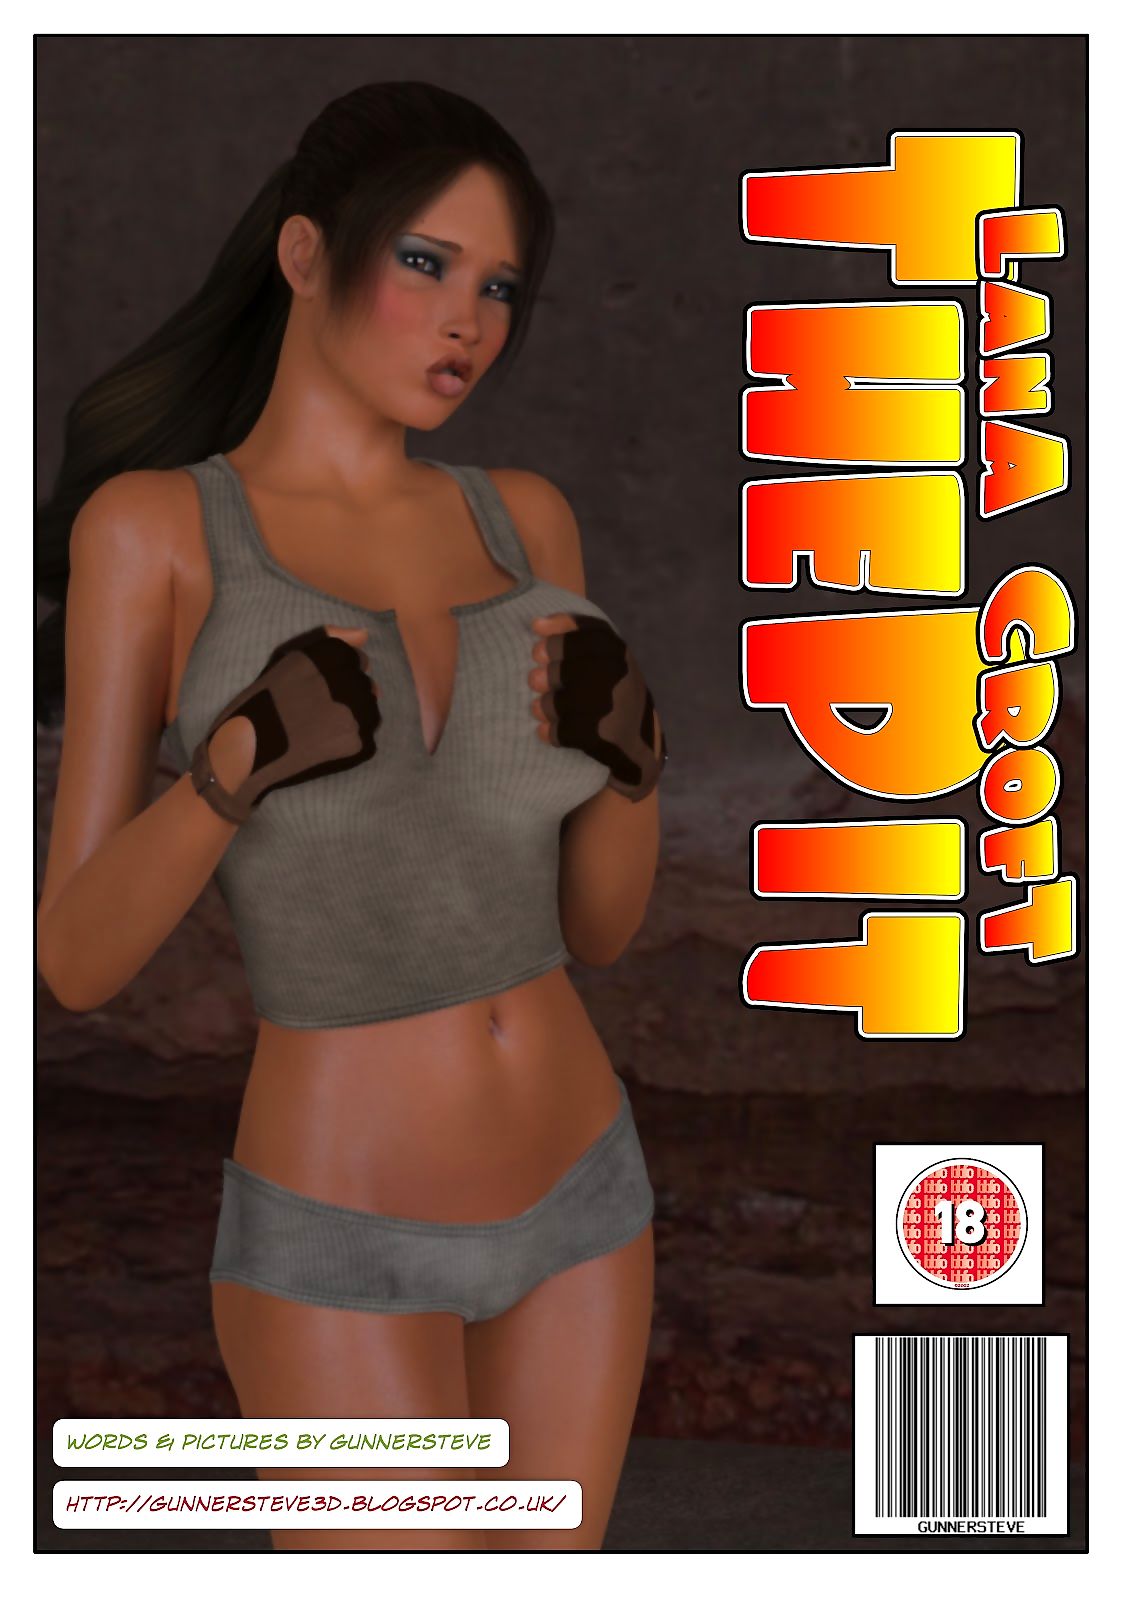 Lara Croft w pit page 1